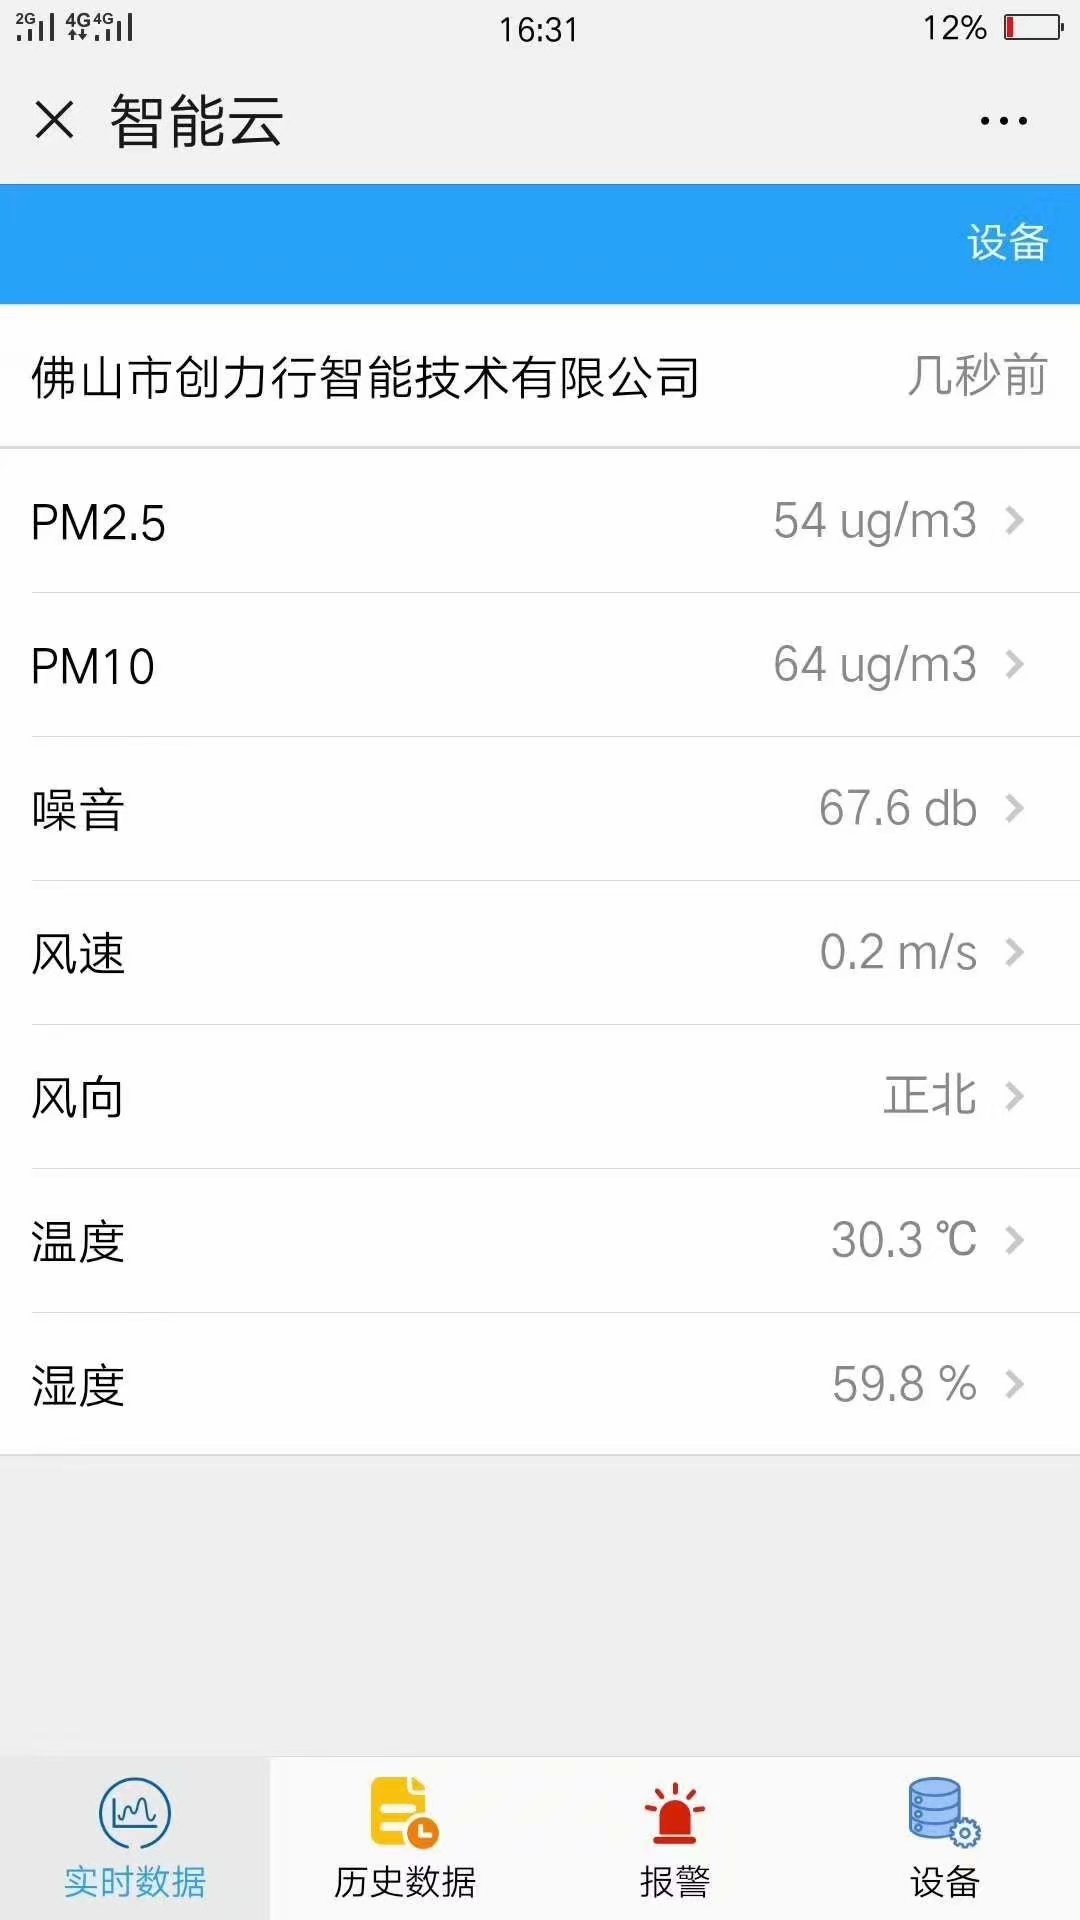 PM2.5扬尘监控系统